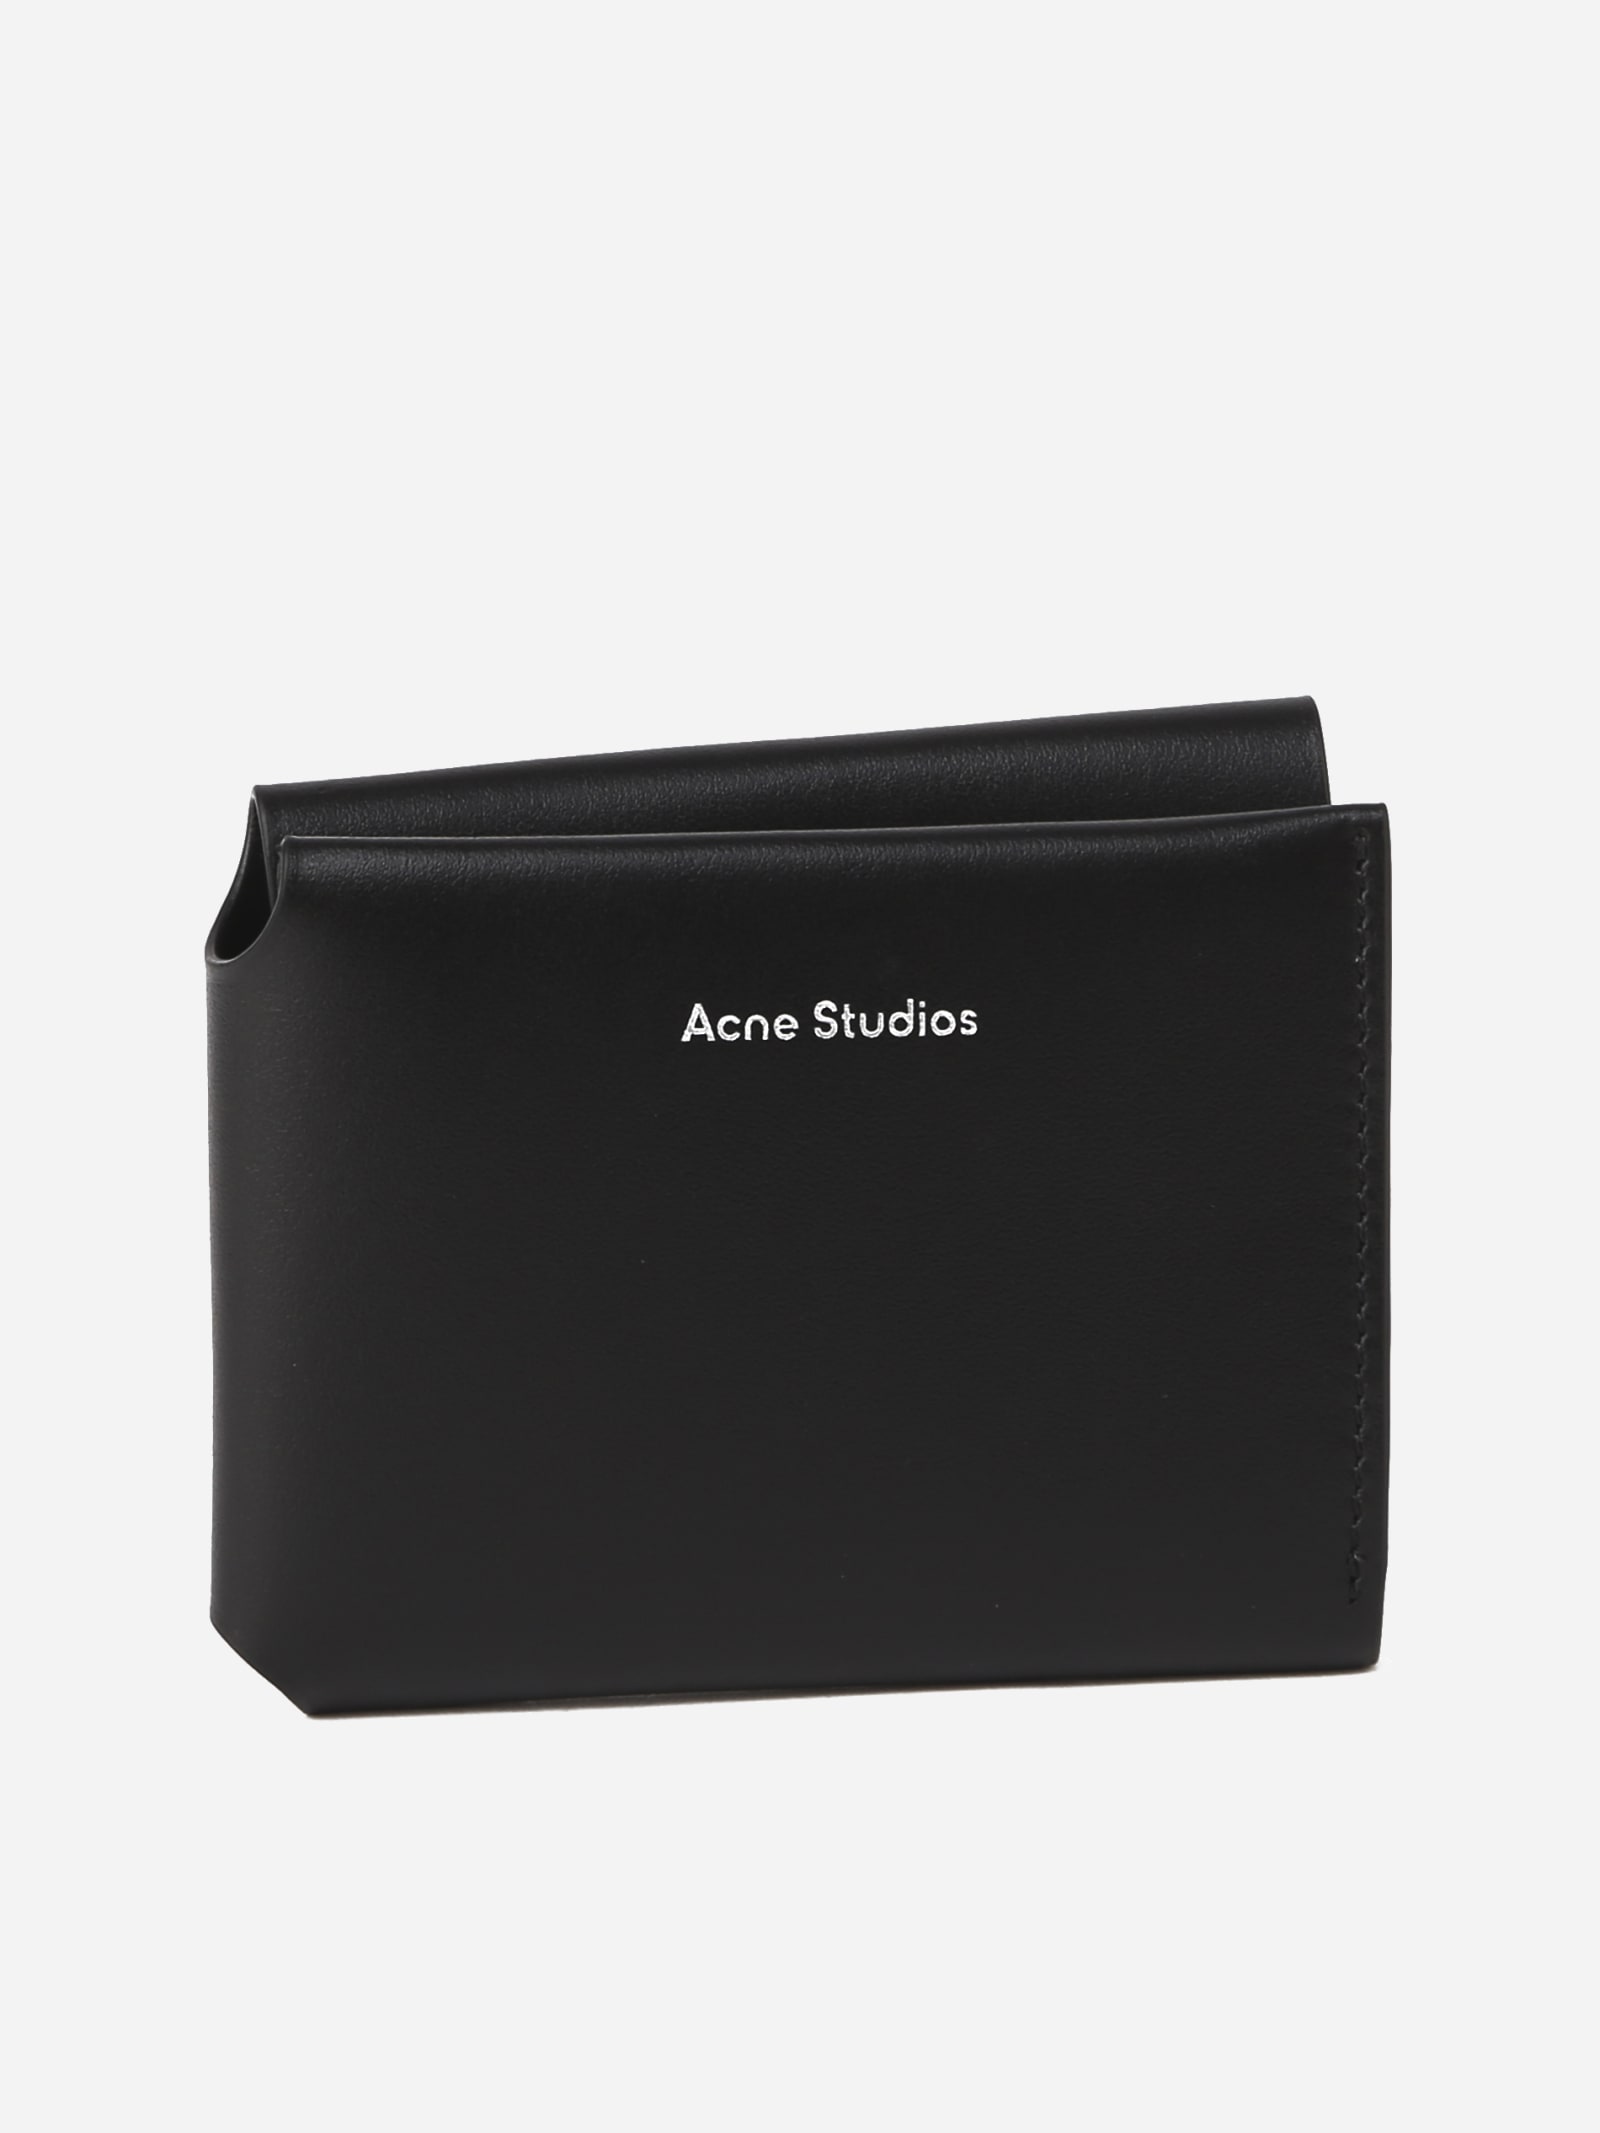 Acne Studios Black Leather Wallet